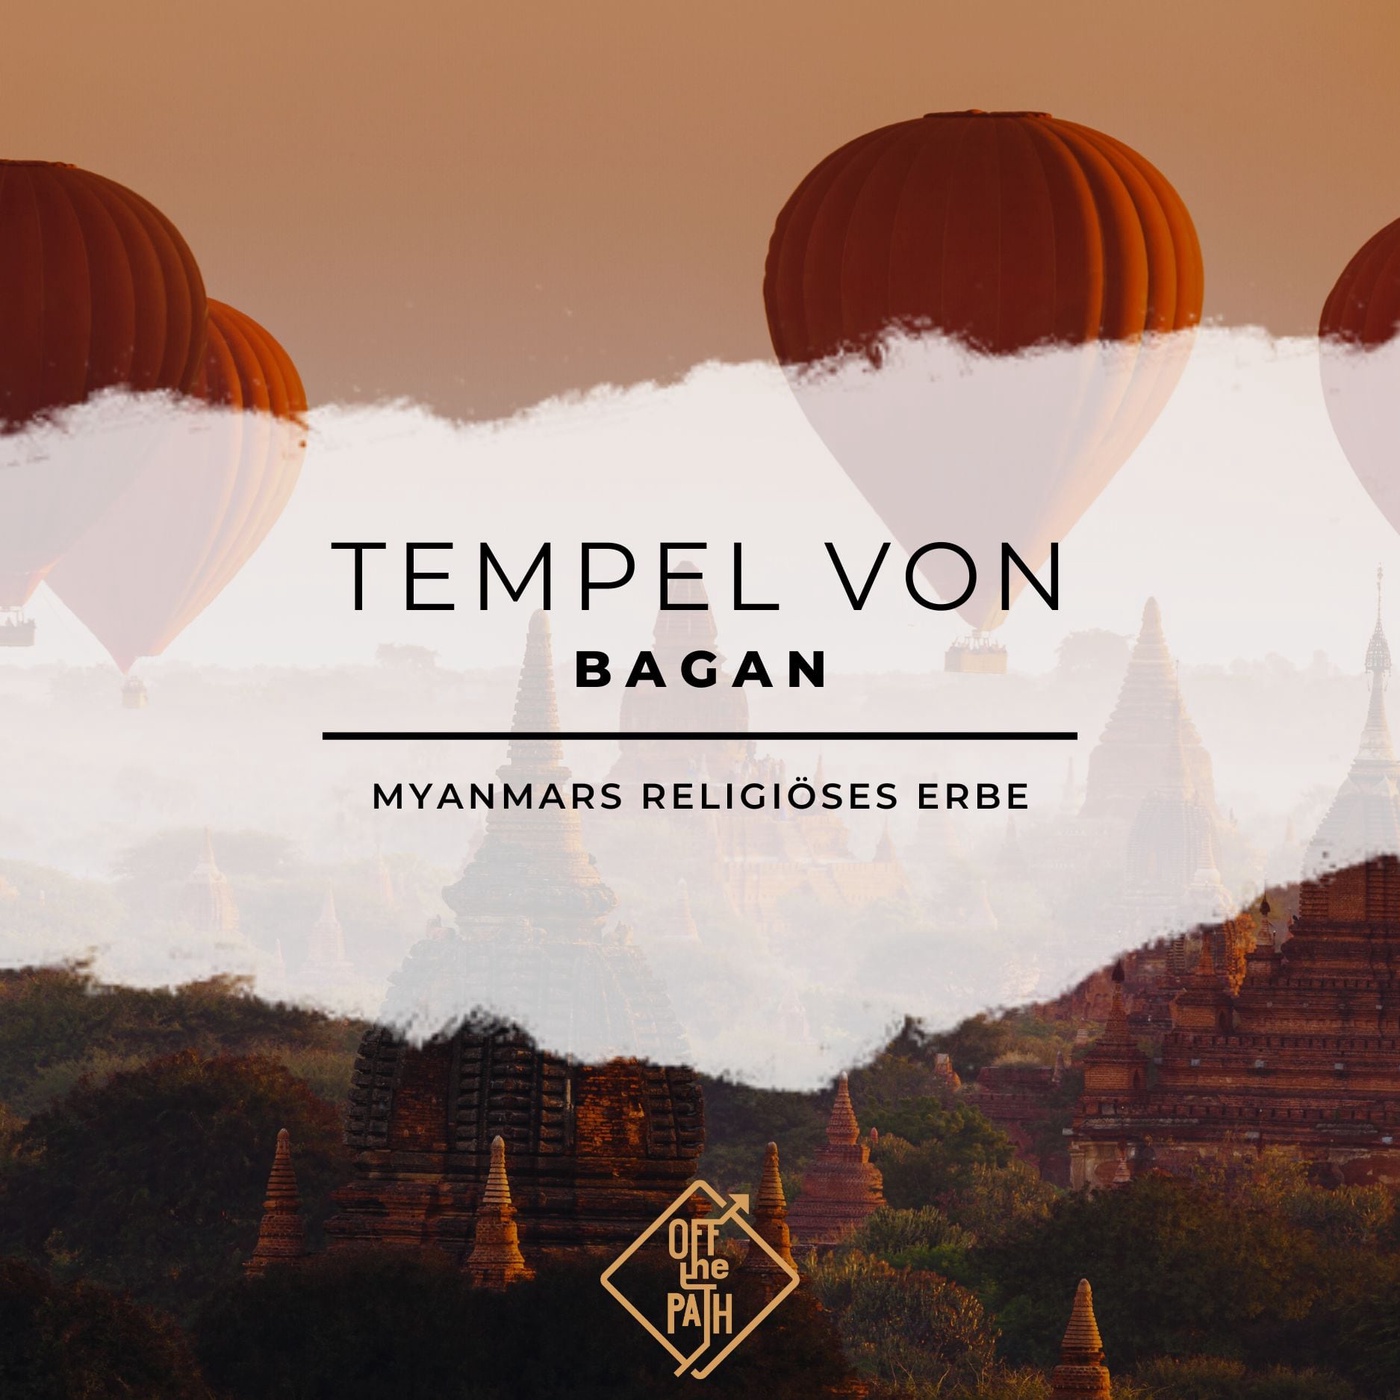 Die verborgenen Tempel von Bagan: Myanmars religiöses Erbe